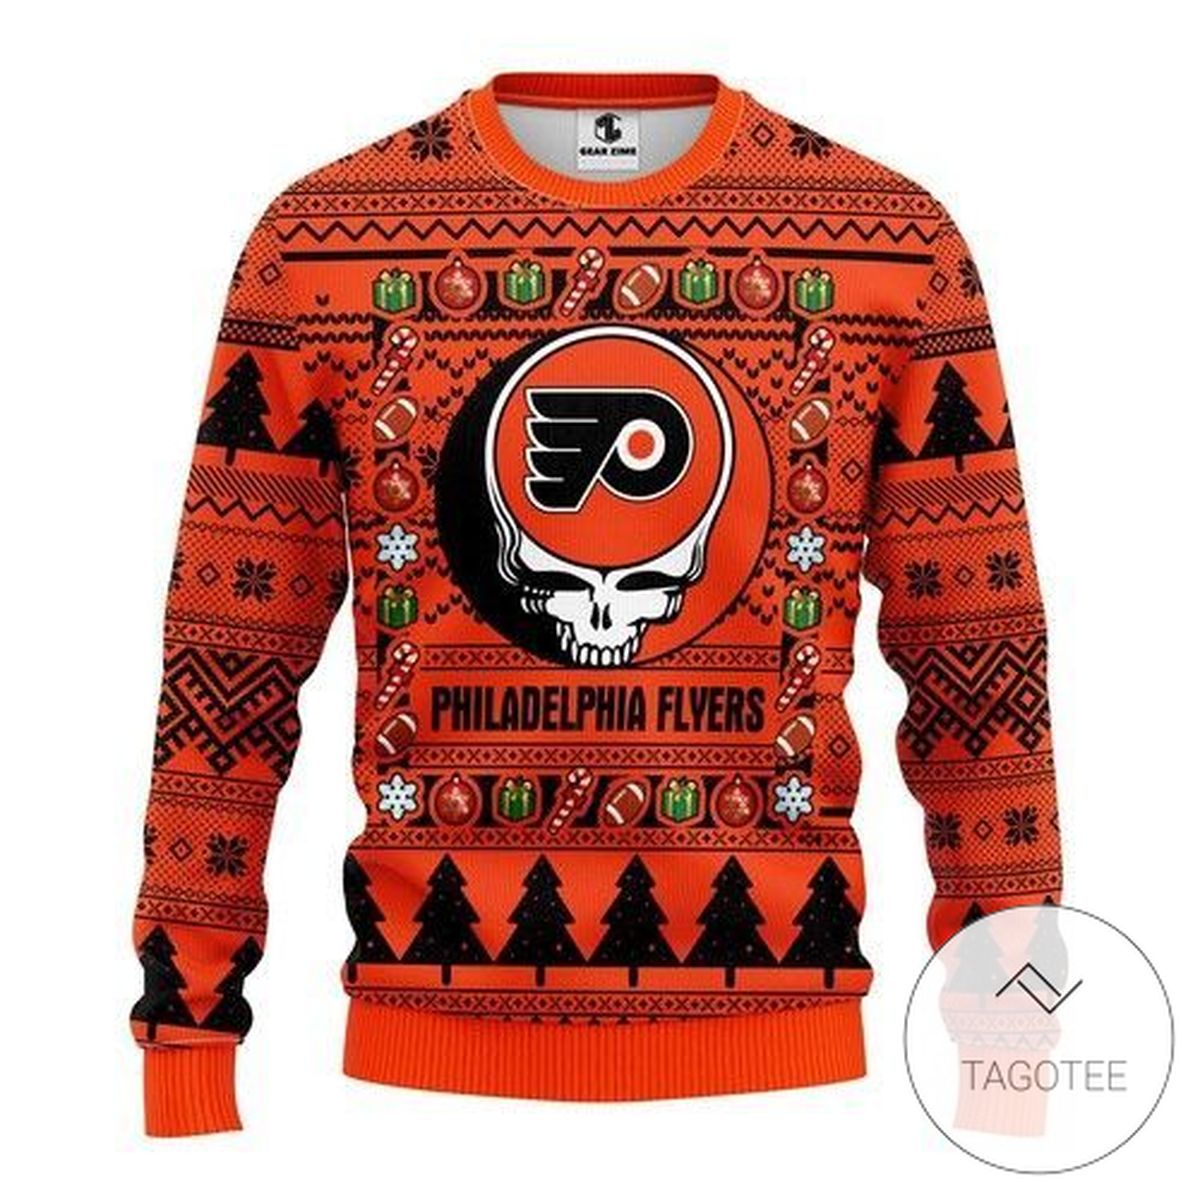 Nhl Philadelphia Flyers Grateful Dead Sweatshirt Knitted Ugly Christmas Sweater